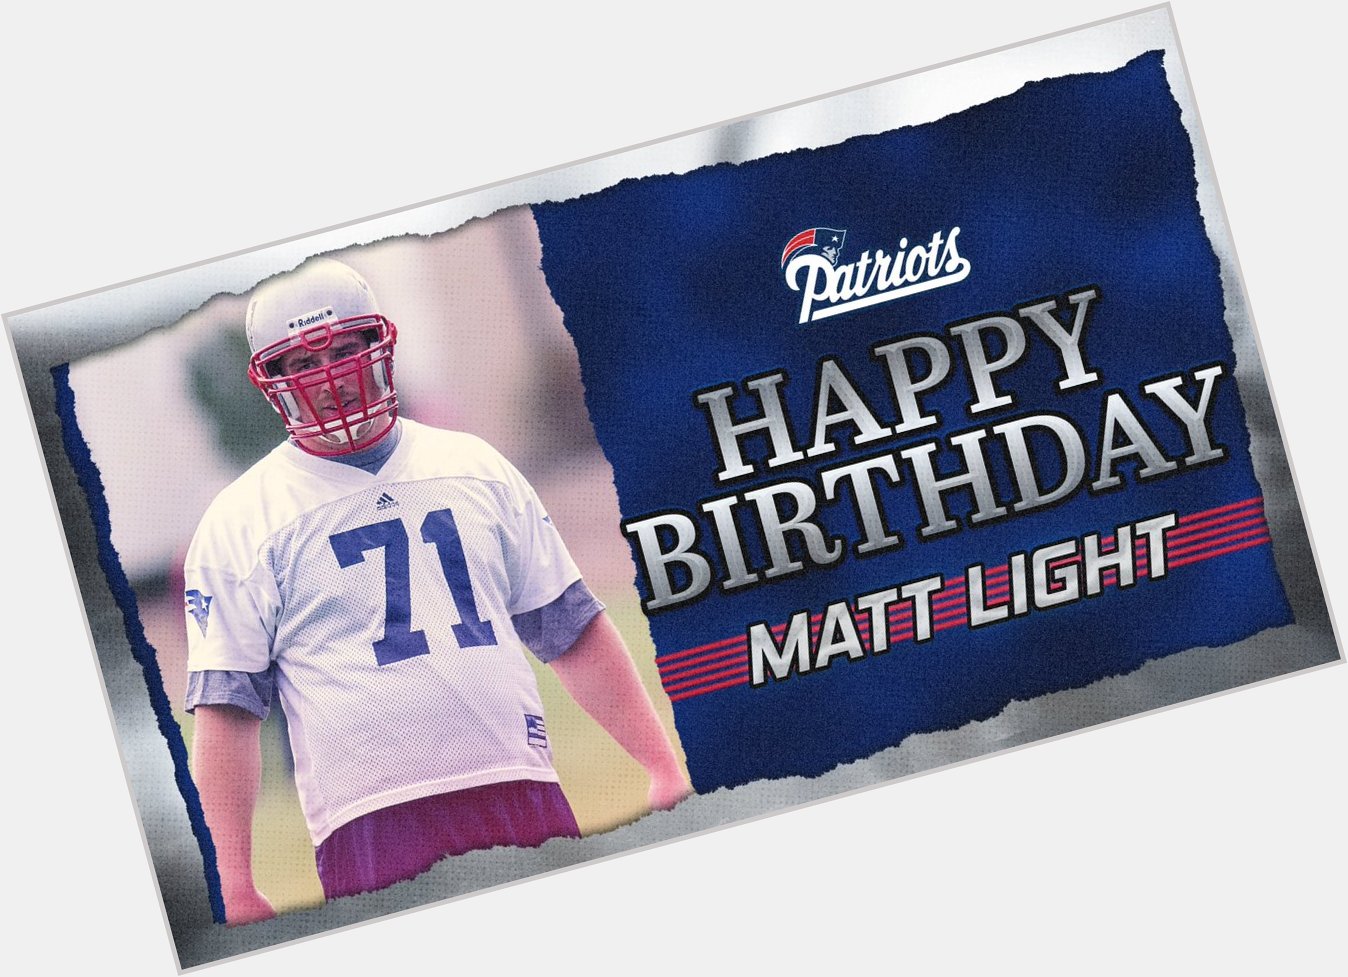 Happy birthday to our second round pick, Matt Light! 